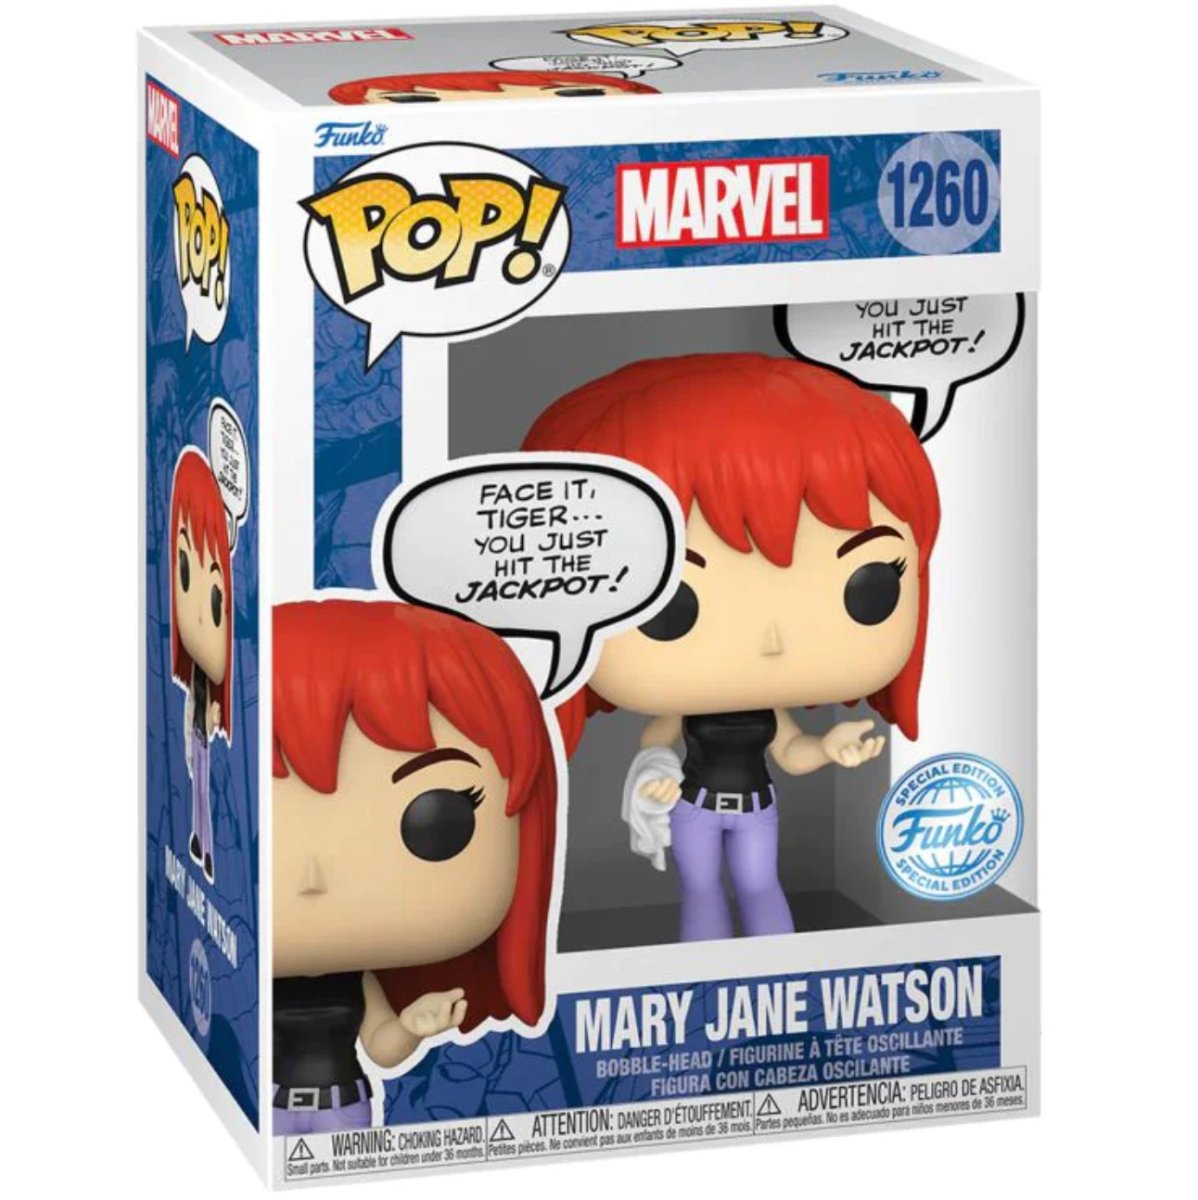 Marvel - Mary Jane Watson (Special Edition) #1260 - Funko Pop! Vinyl Marvel - Persona Toys